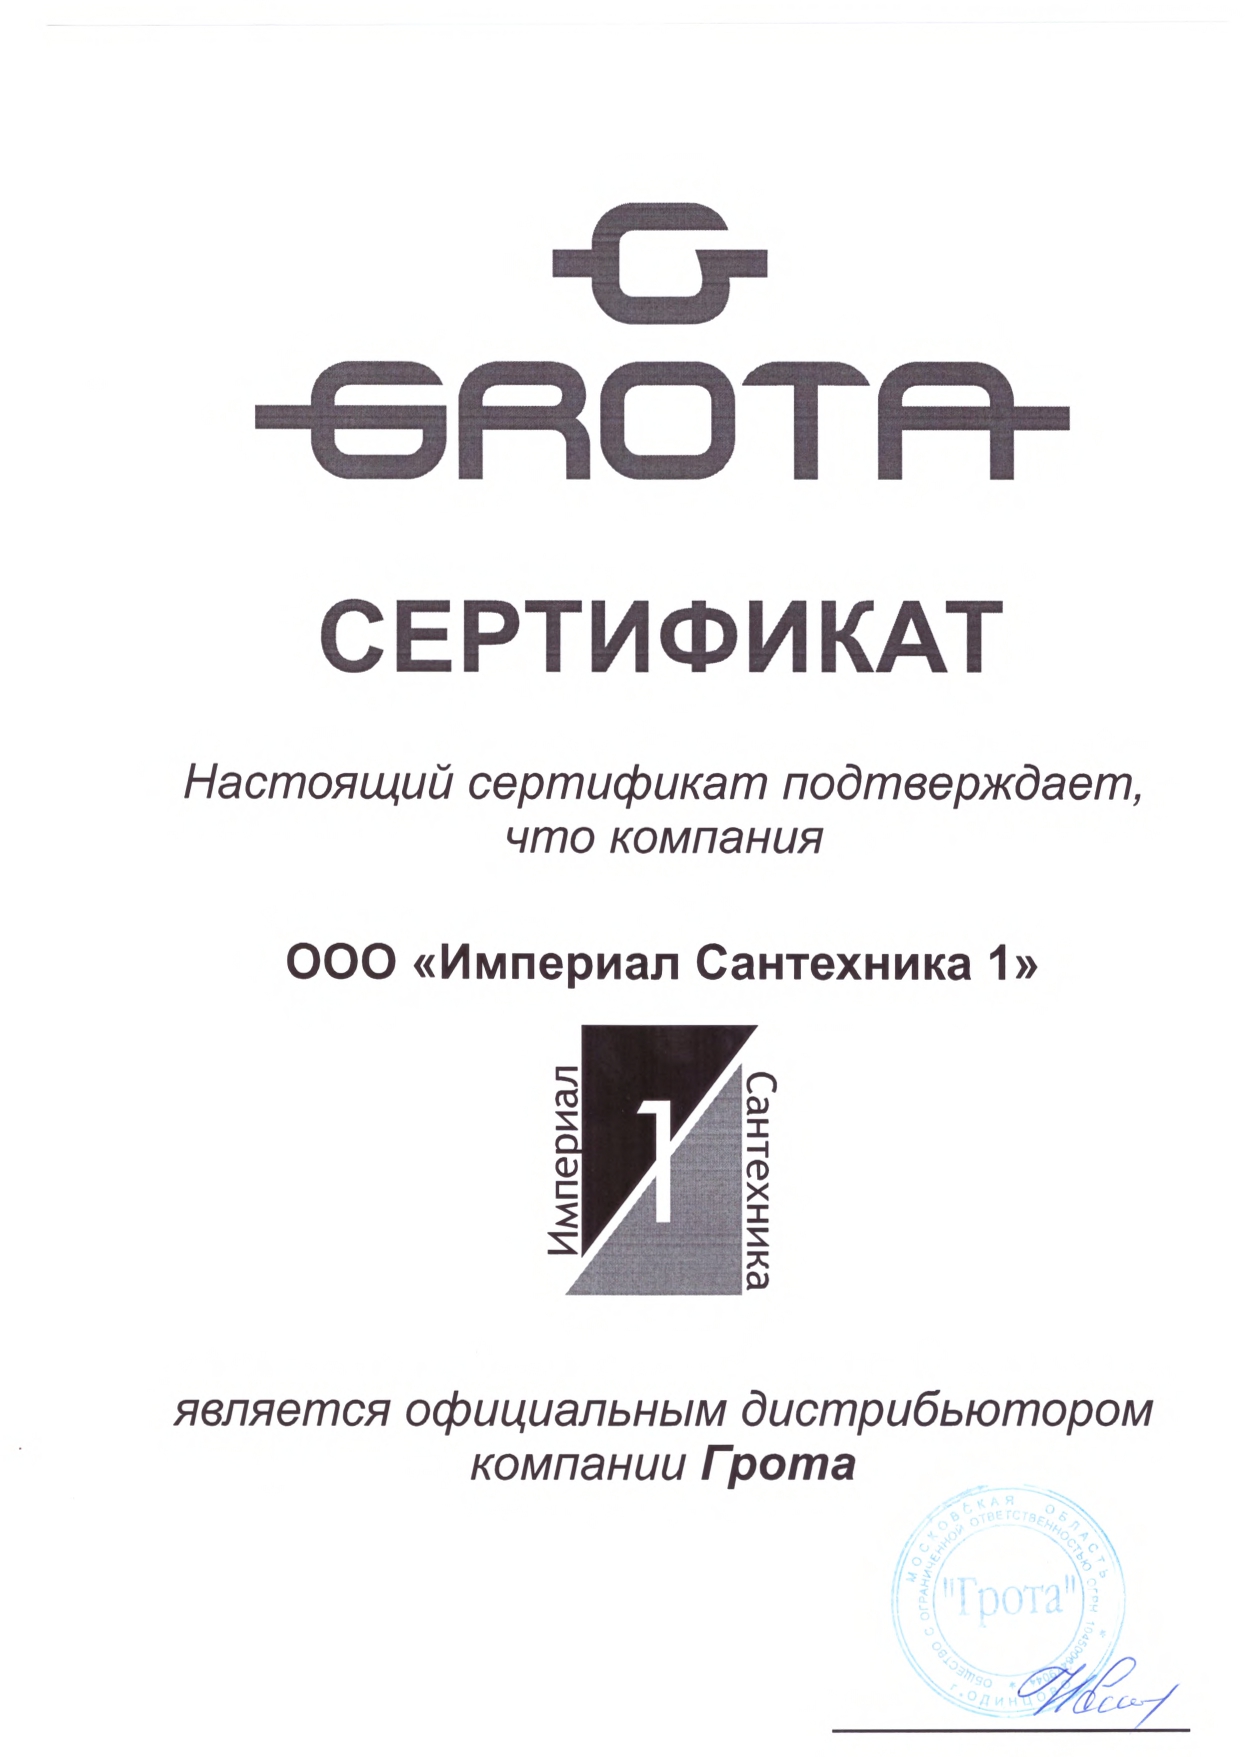 Сертификат официального дистрибьютора Грота.jpg